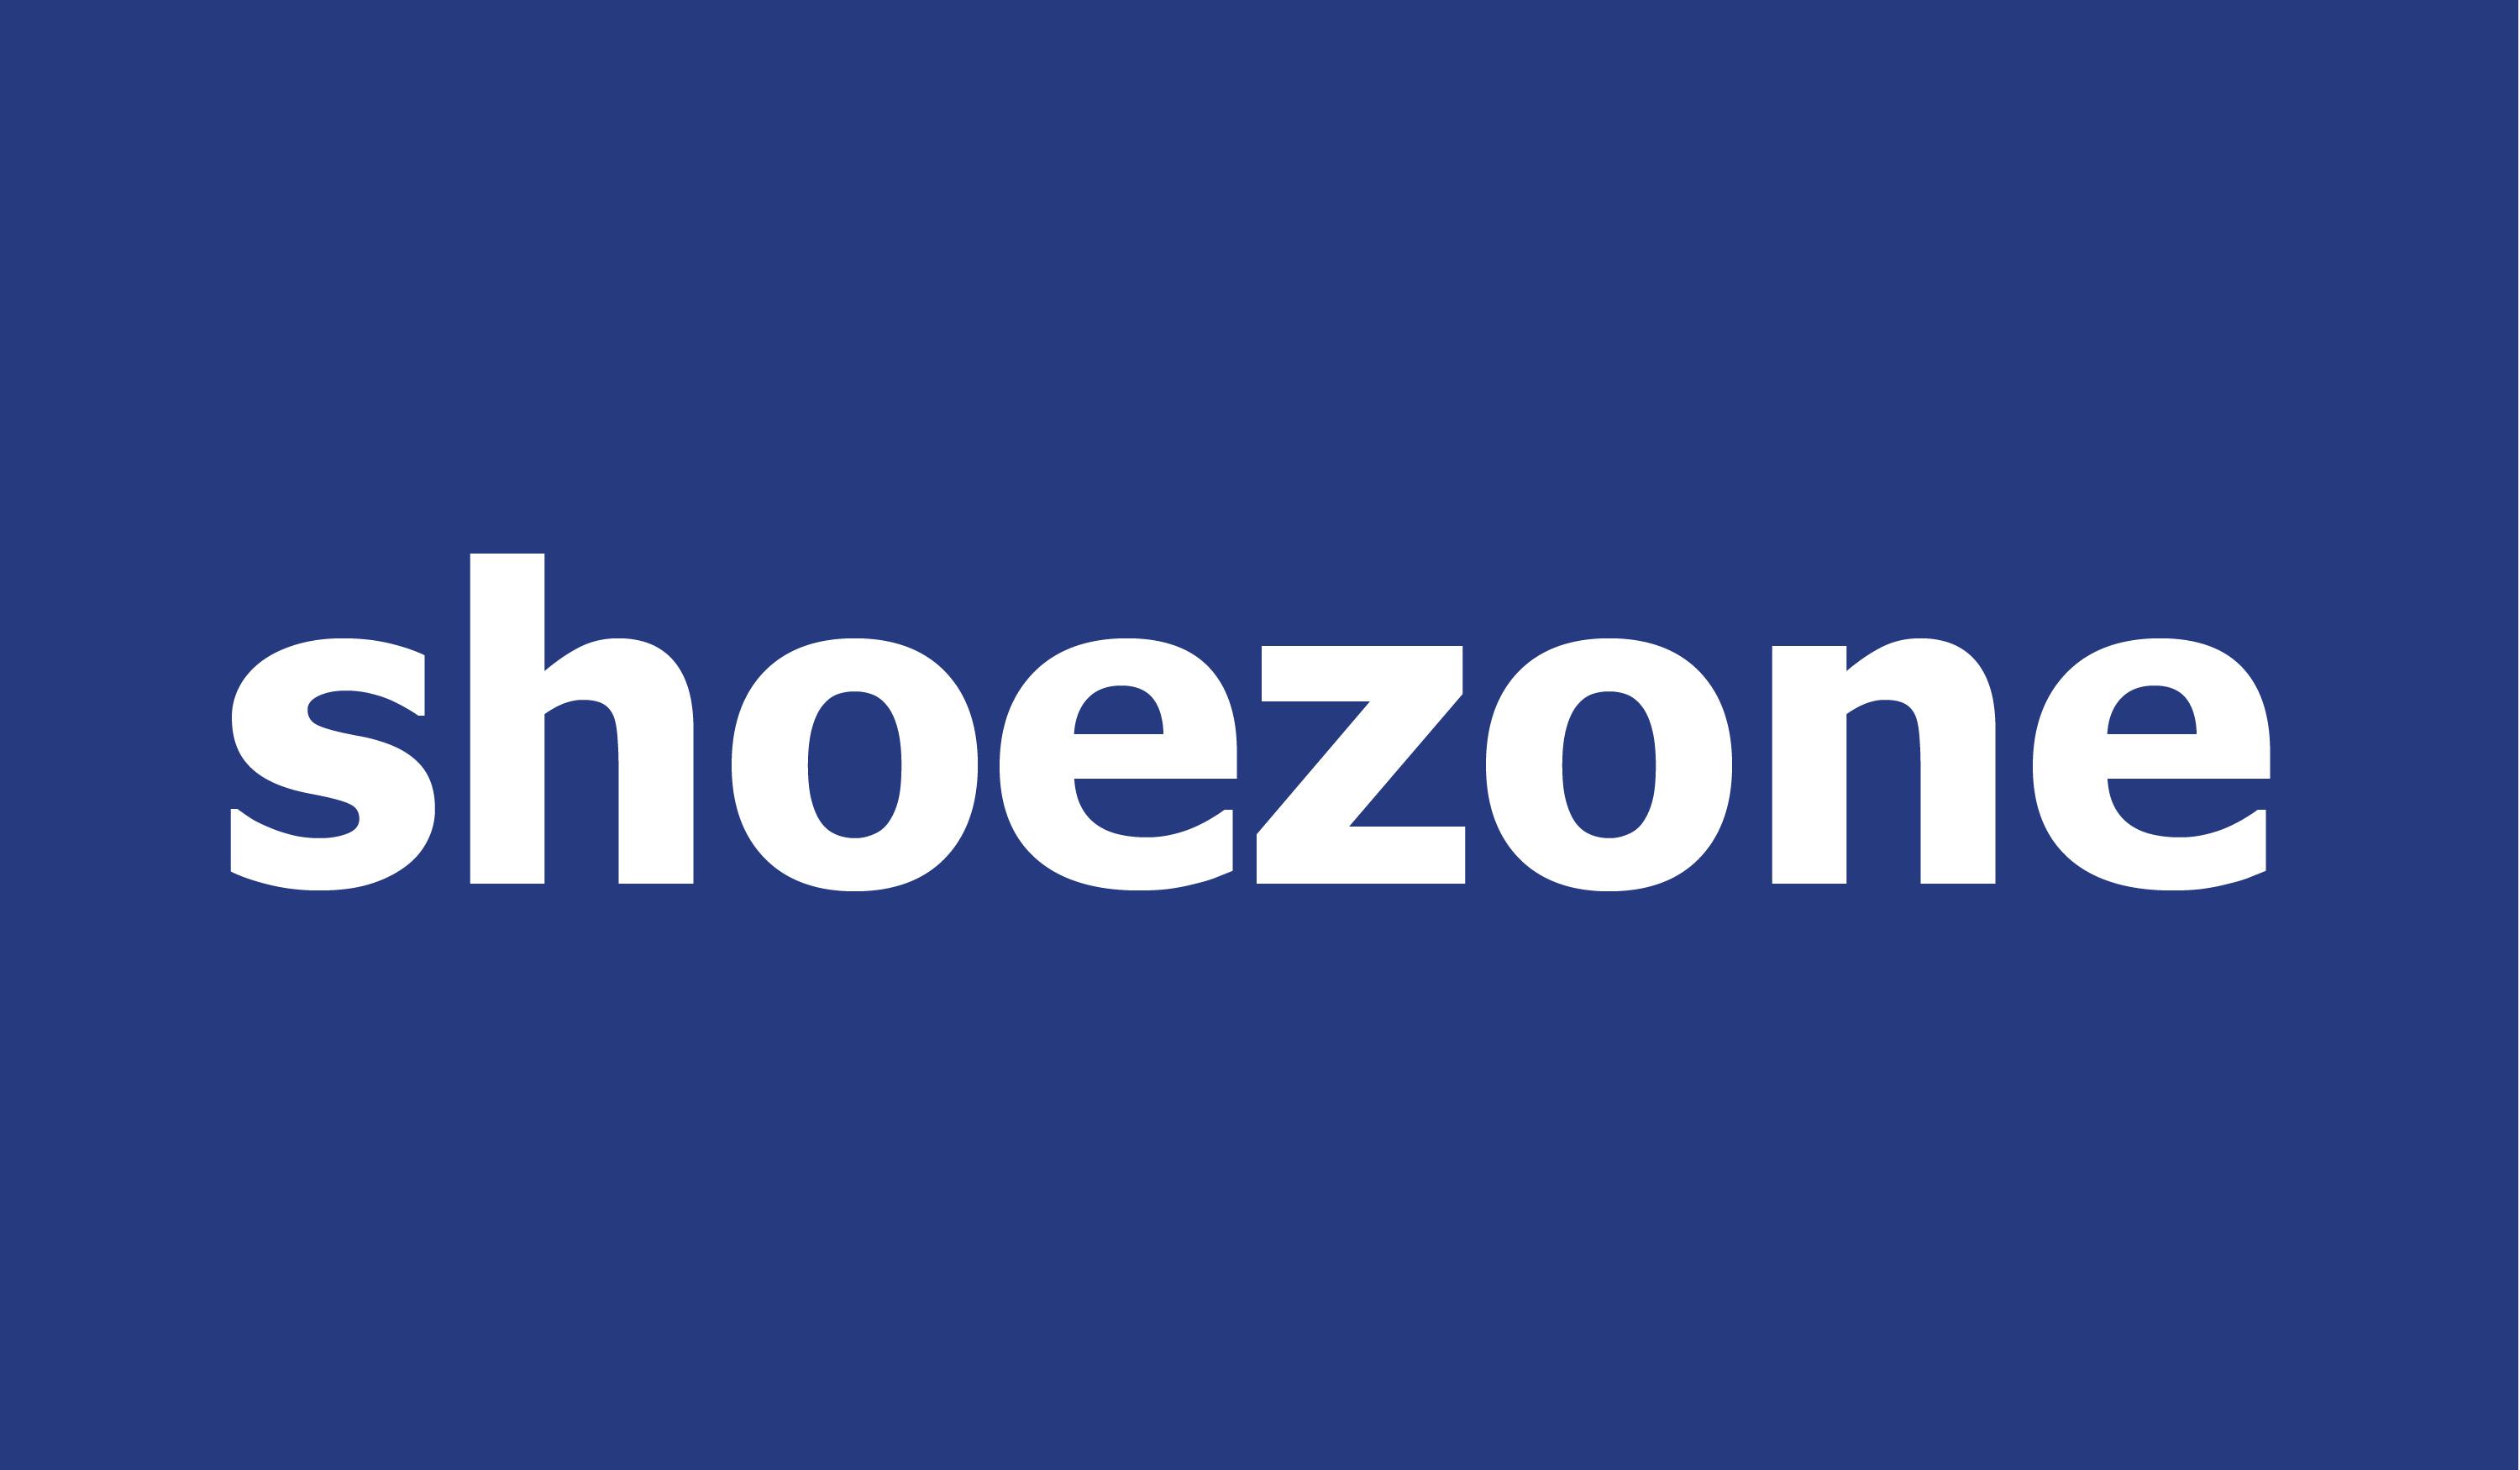 Shoezone logo 720 x 420 pixels 01